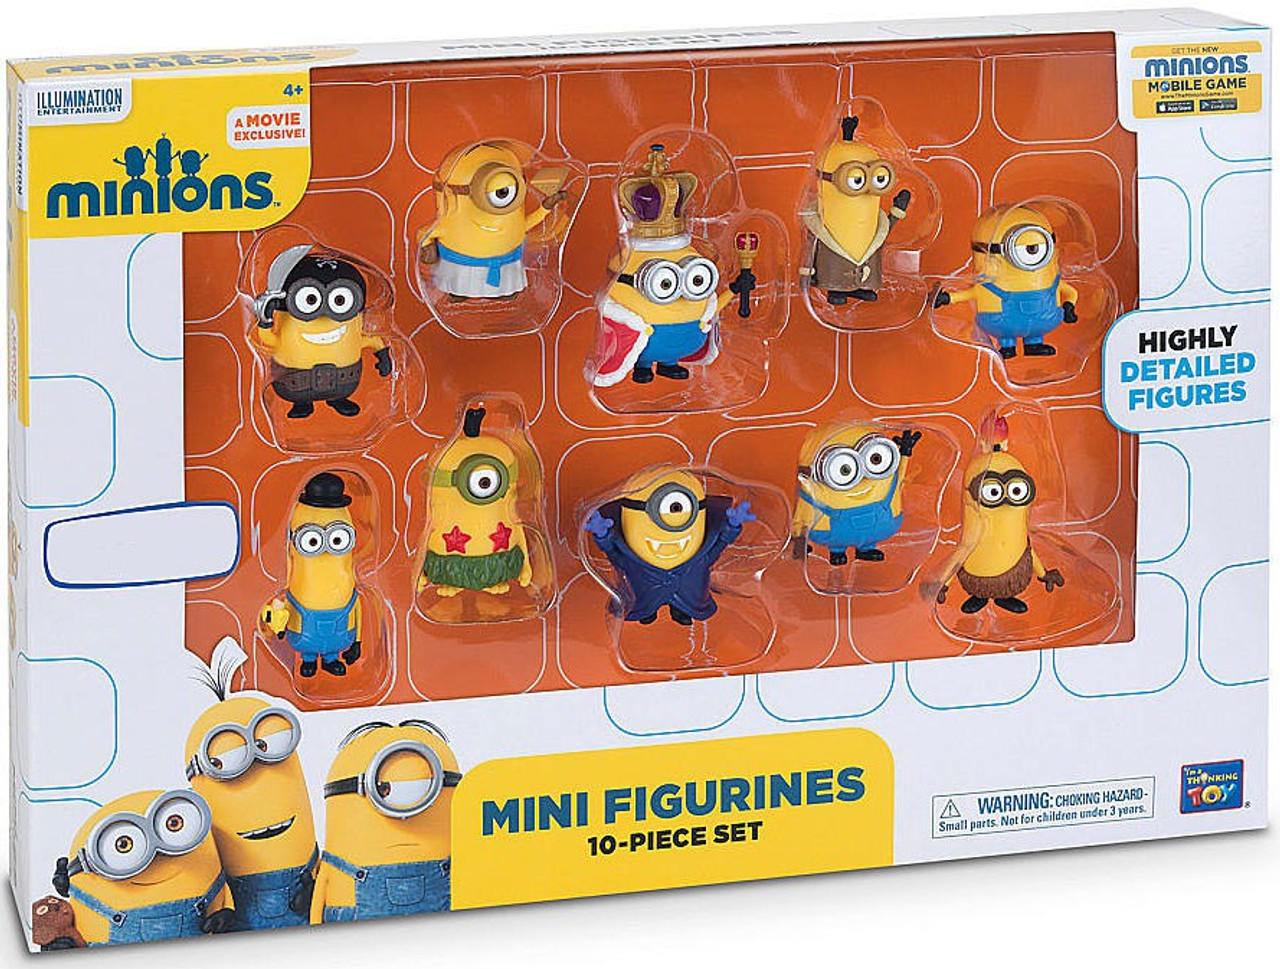 Despicable Me Minions Movie Minions Mini Figurines Exclusive 2 10-Piece ... - Apiz49zah  42093.1461372467